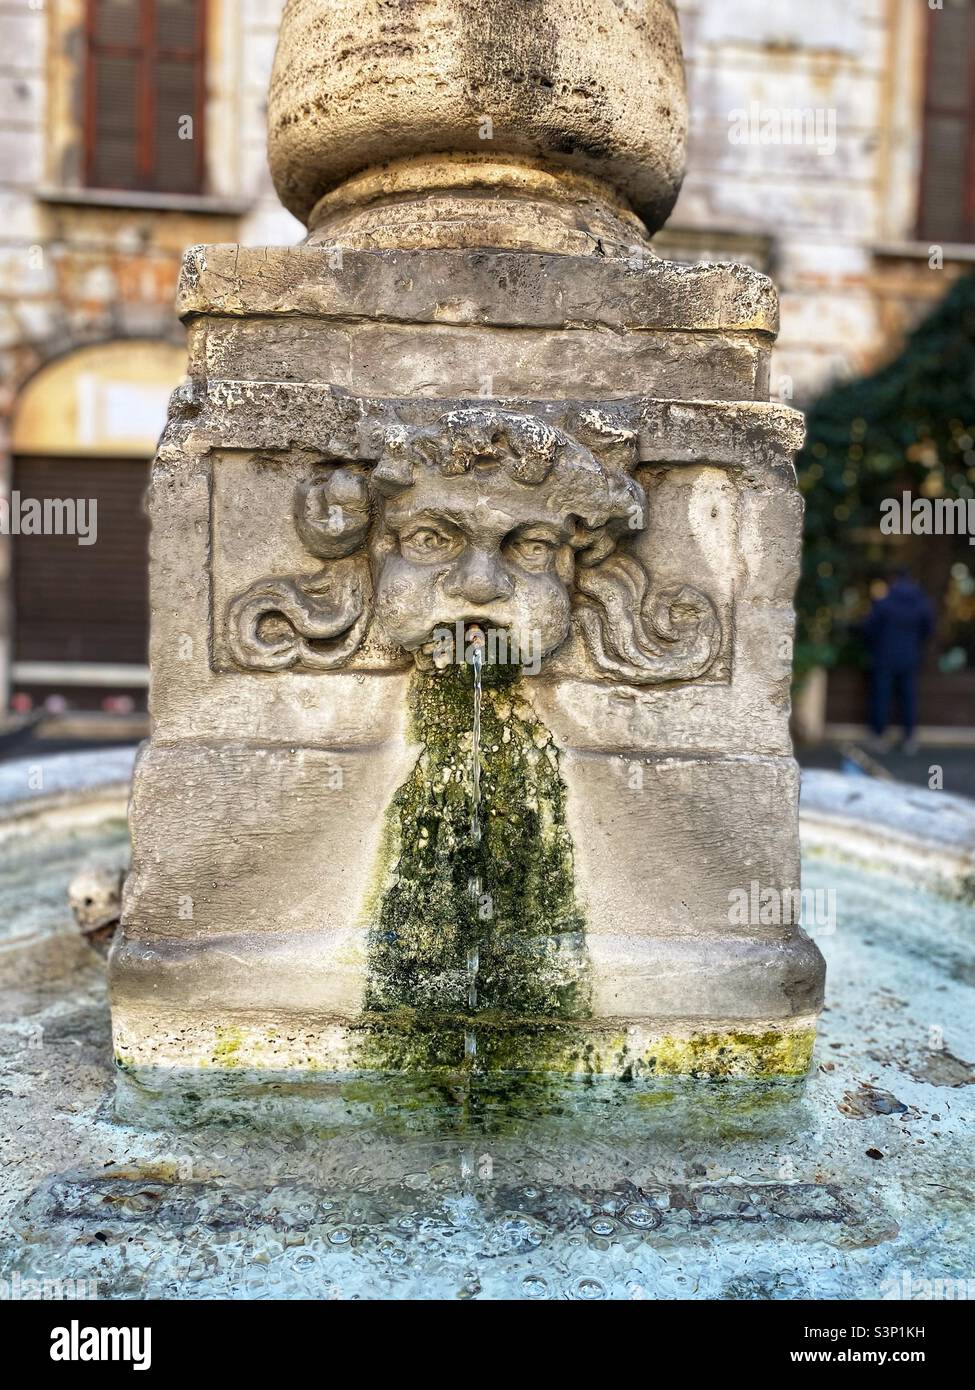 Fontana piazza san simeone Stock Photo